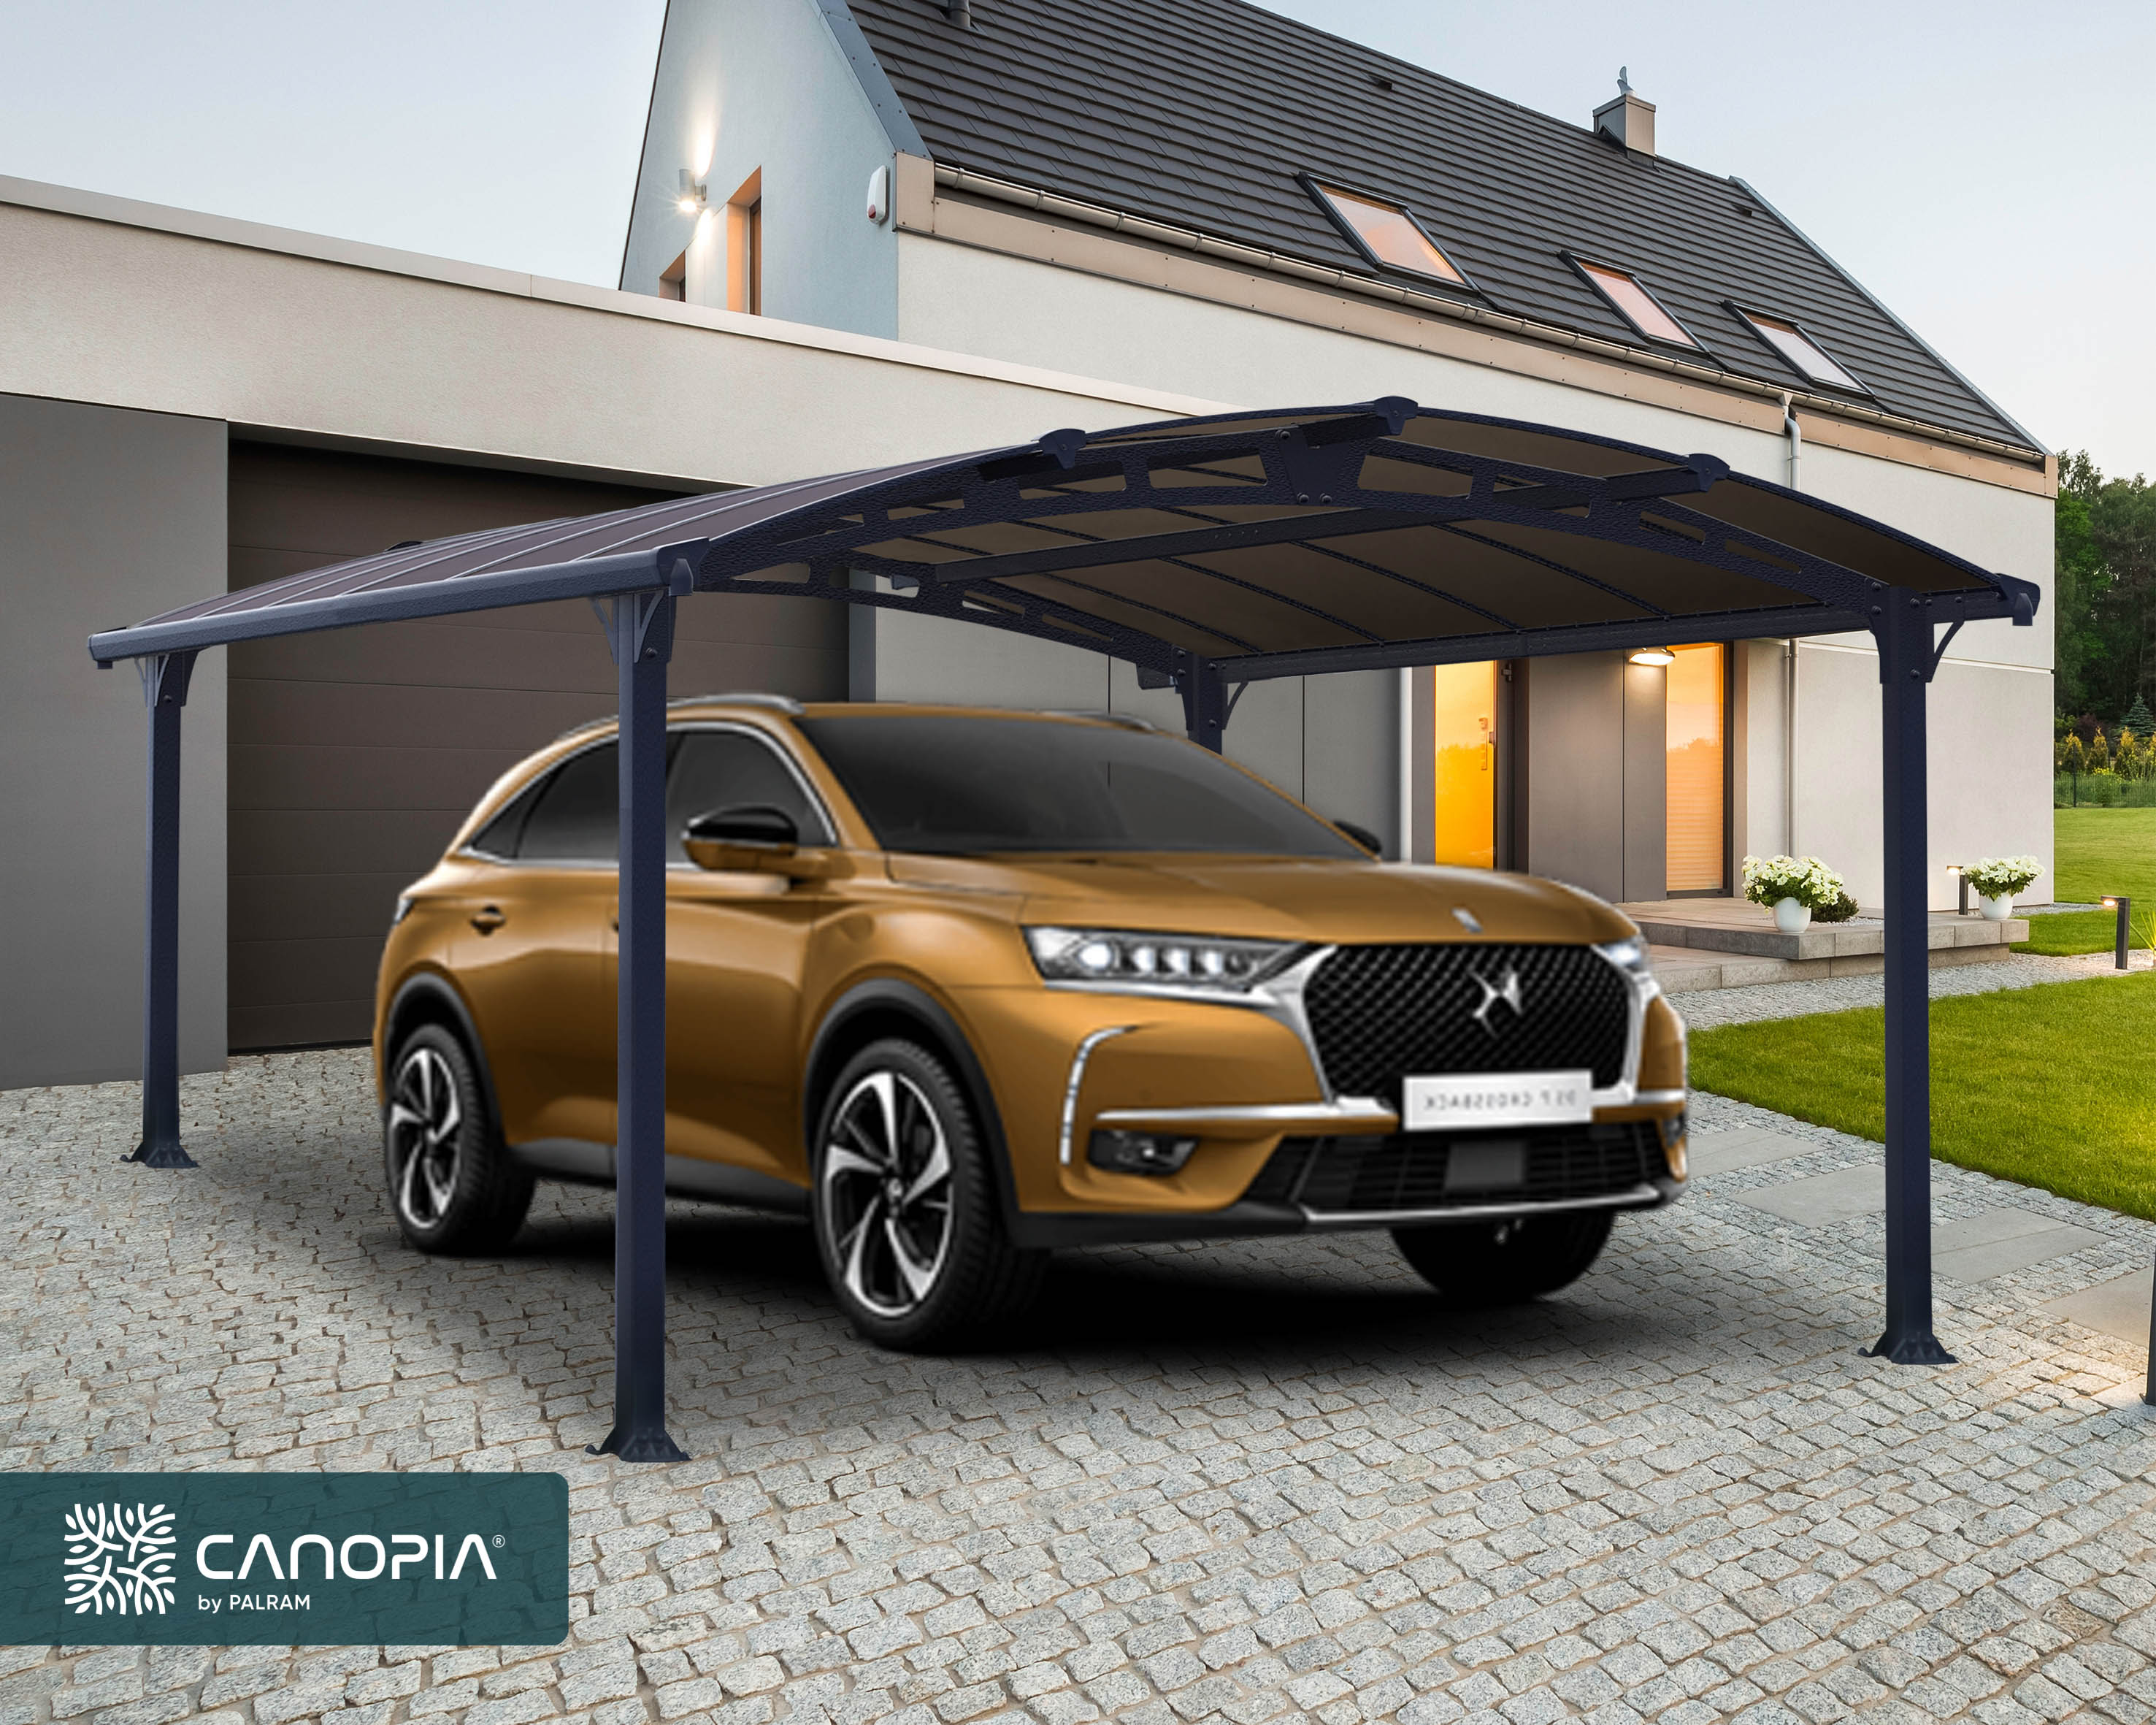 Carport simple autoportant en aluminium - 1 voiture - 15,3 m² - Gris -  GENARO